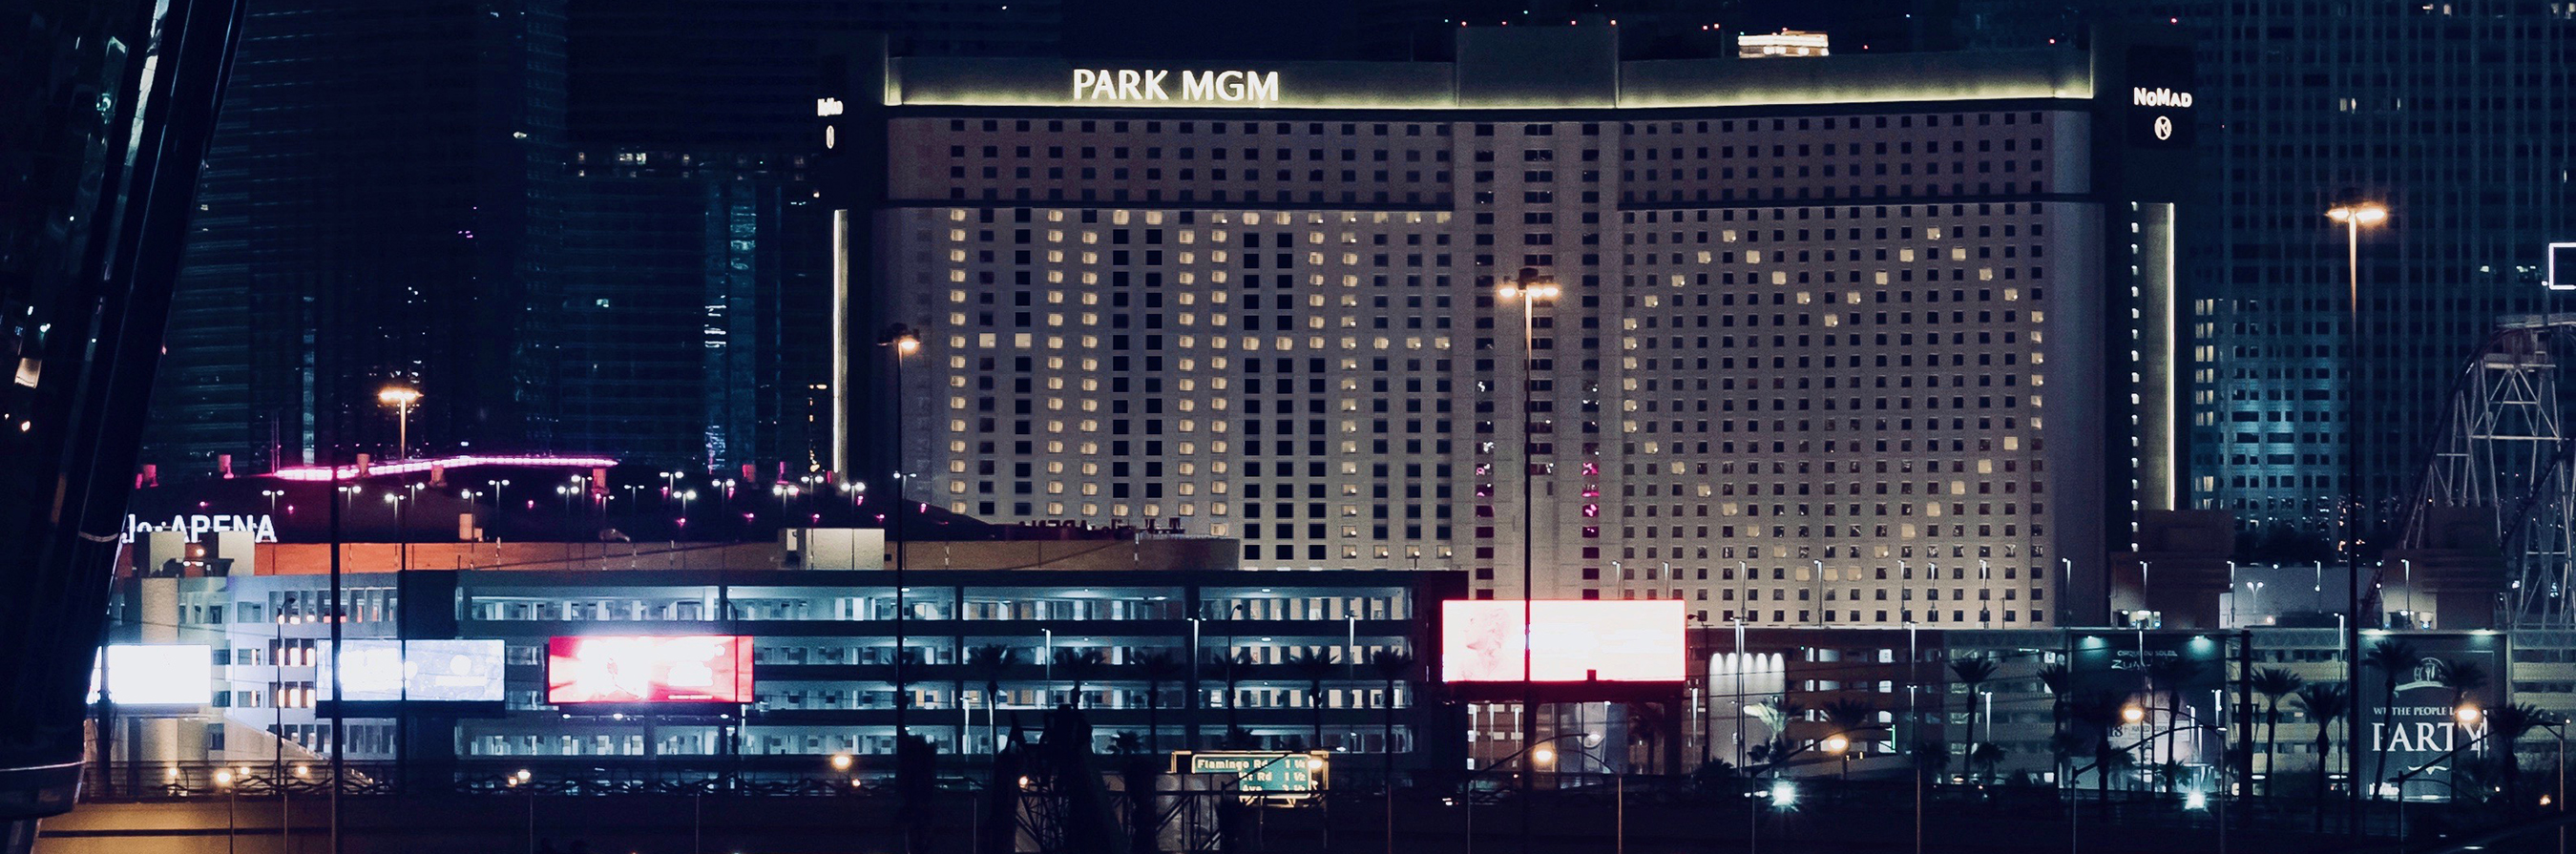 Park MGM